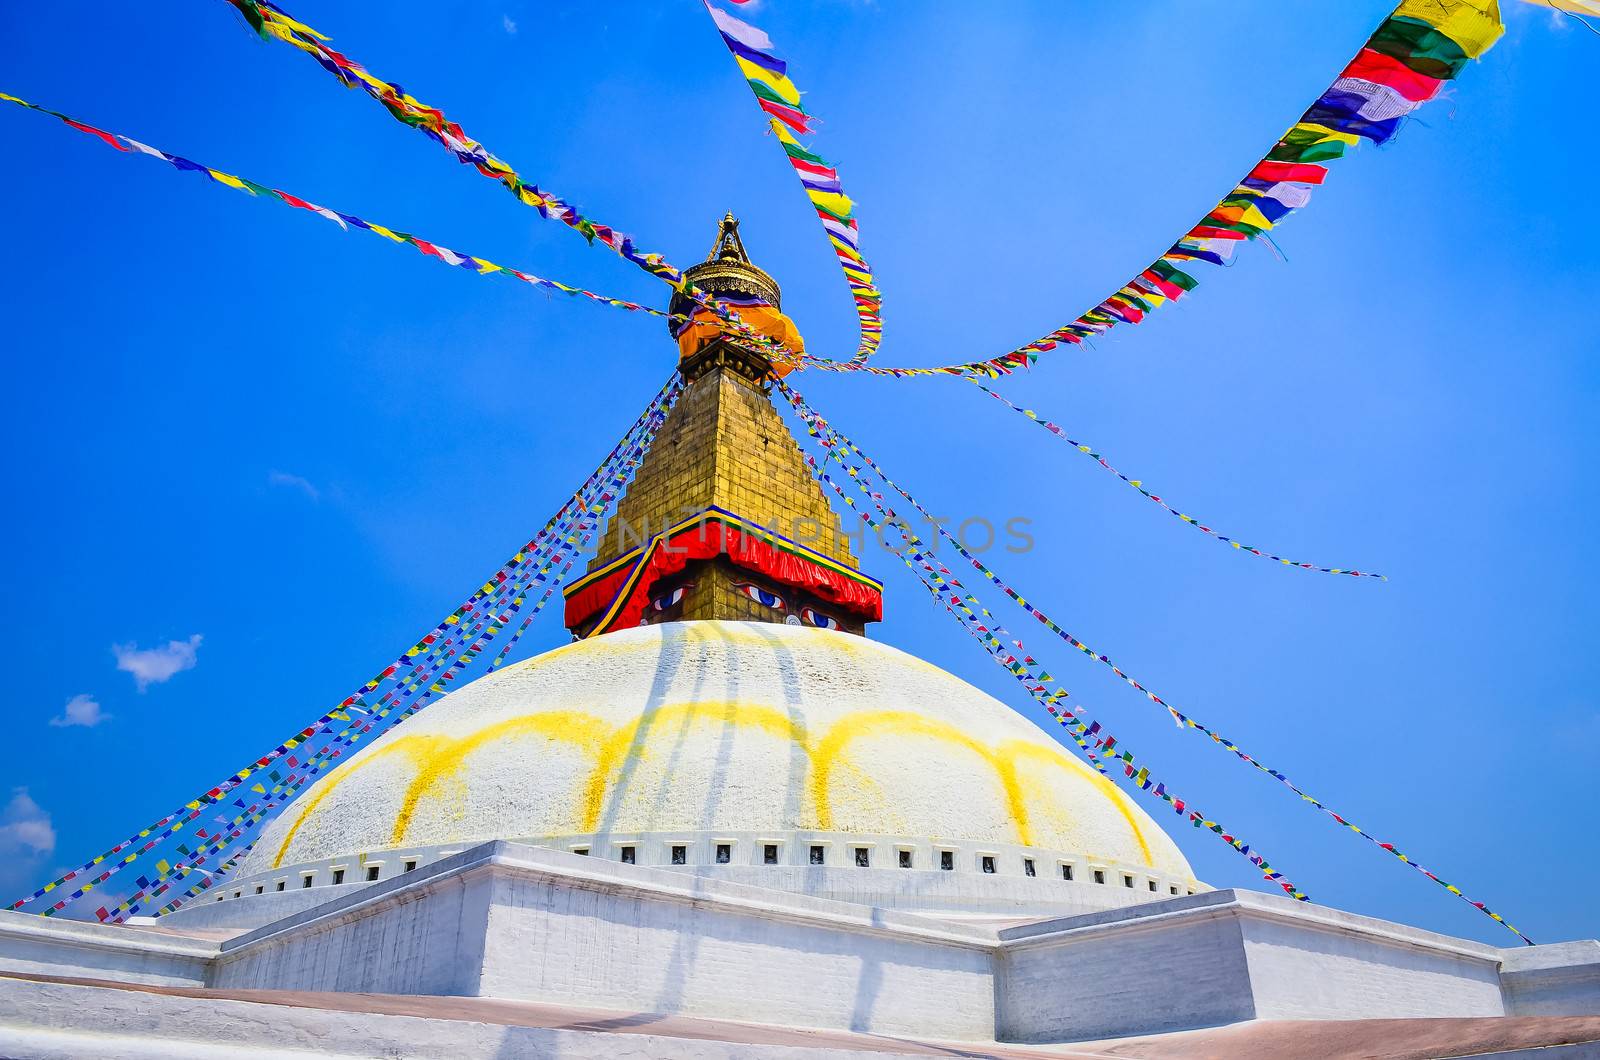 Bouddhanath stupa during the day in Kathmandu, Nepal by martinm303